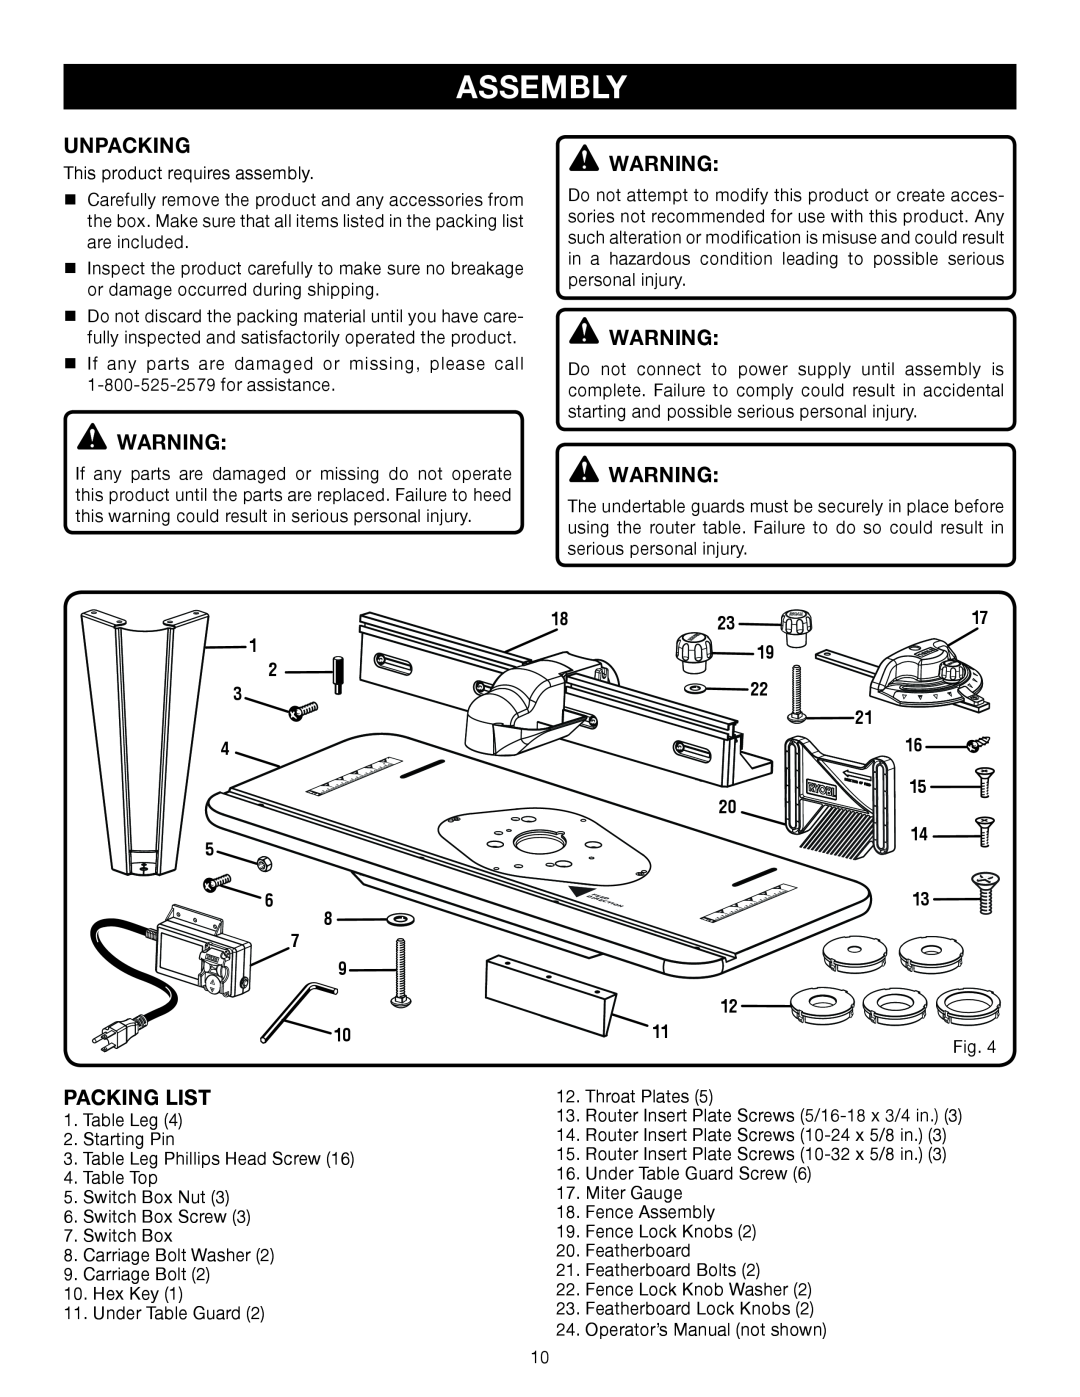 Ryobi A25RT02 manual Assembly, Unpacking, Packing List 